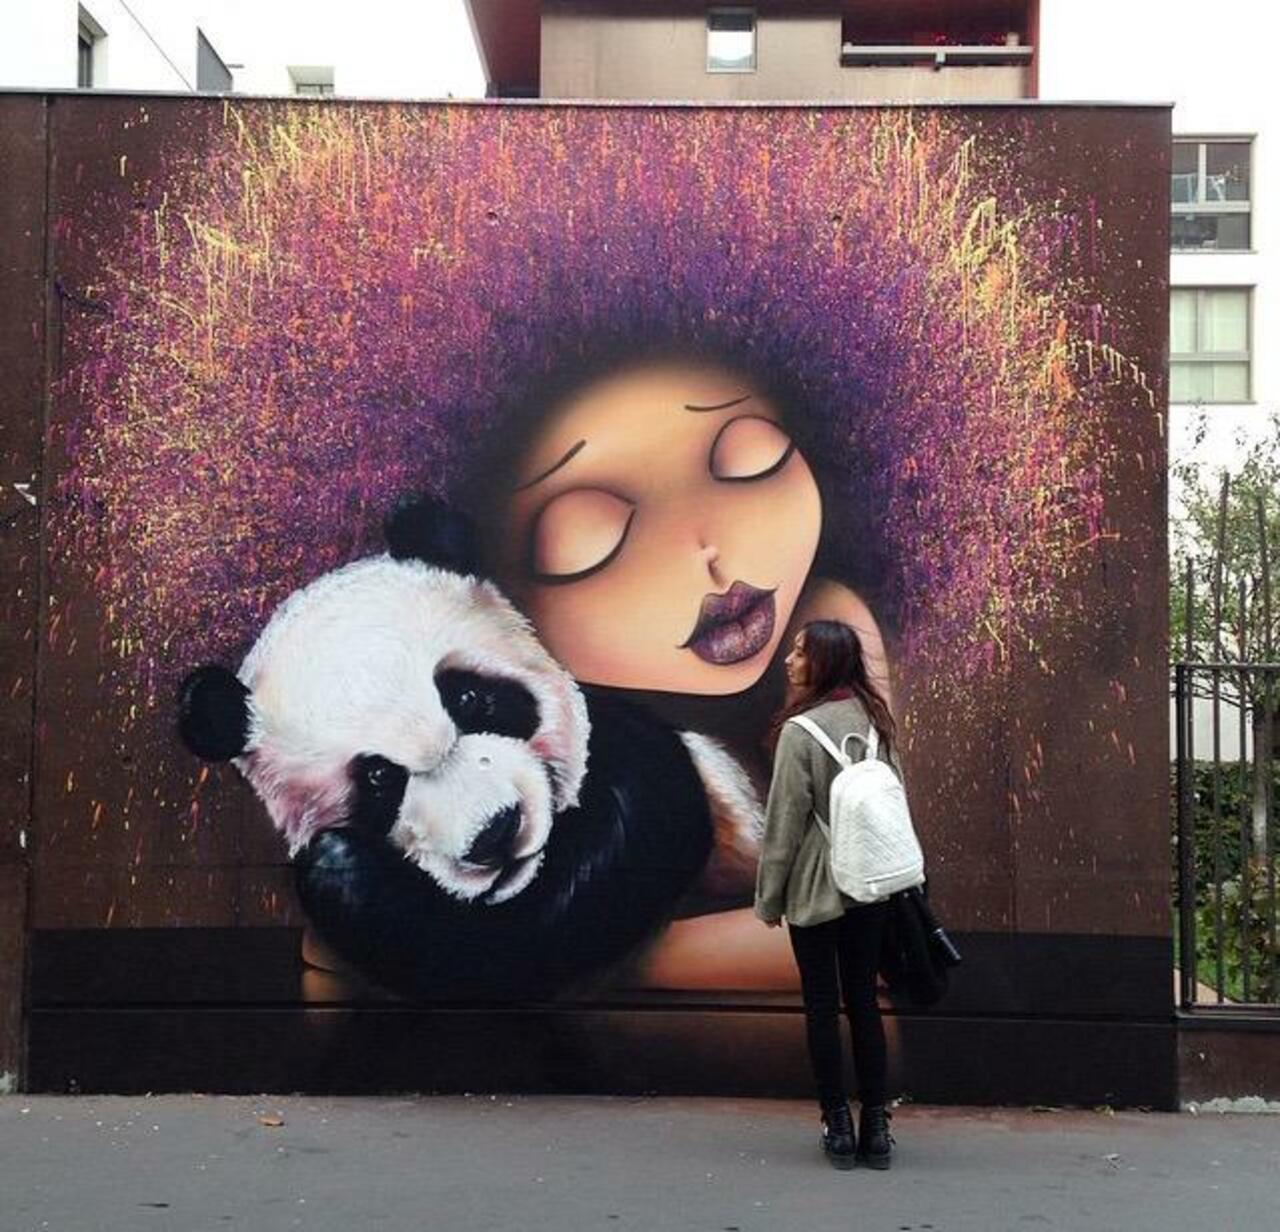 Street Art by VinieGraffiti in Paris 

#art #graffiti #mural #streetart http://t.co/FGlrRWaGpC